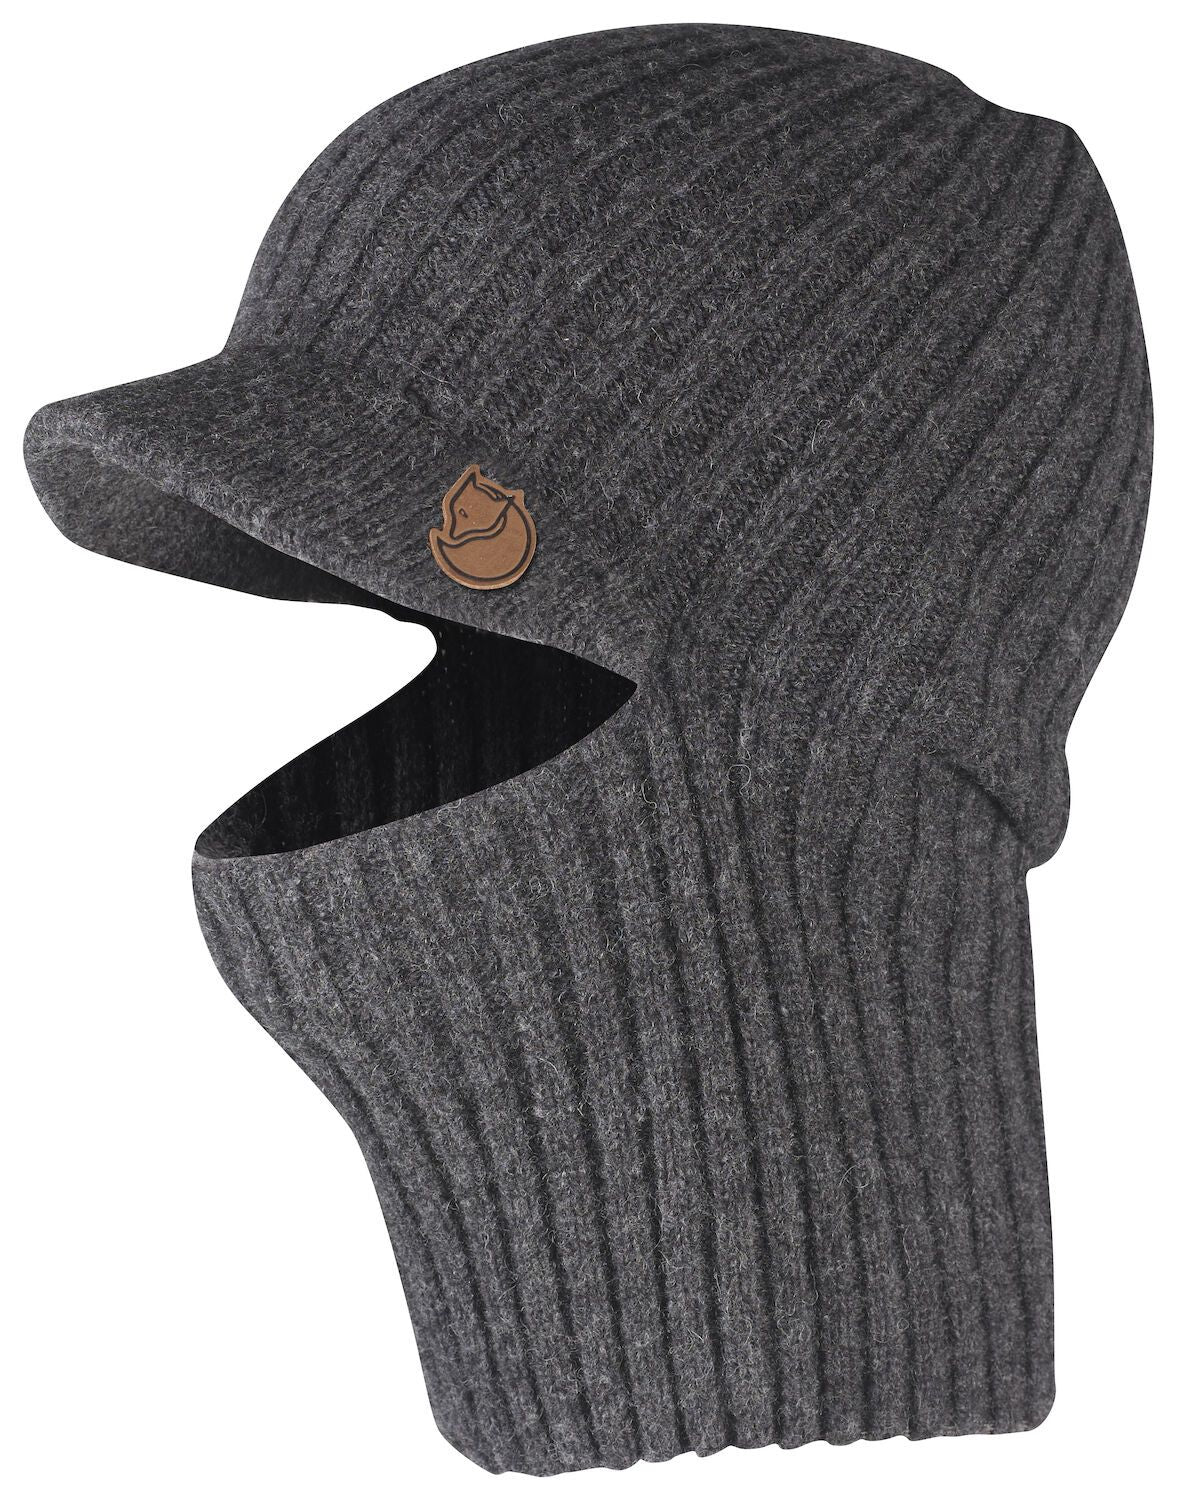 heavy winter black cap